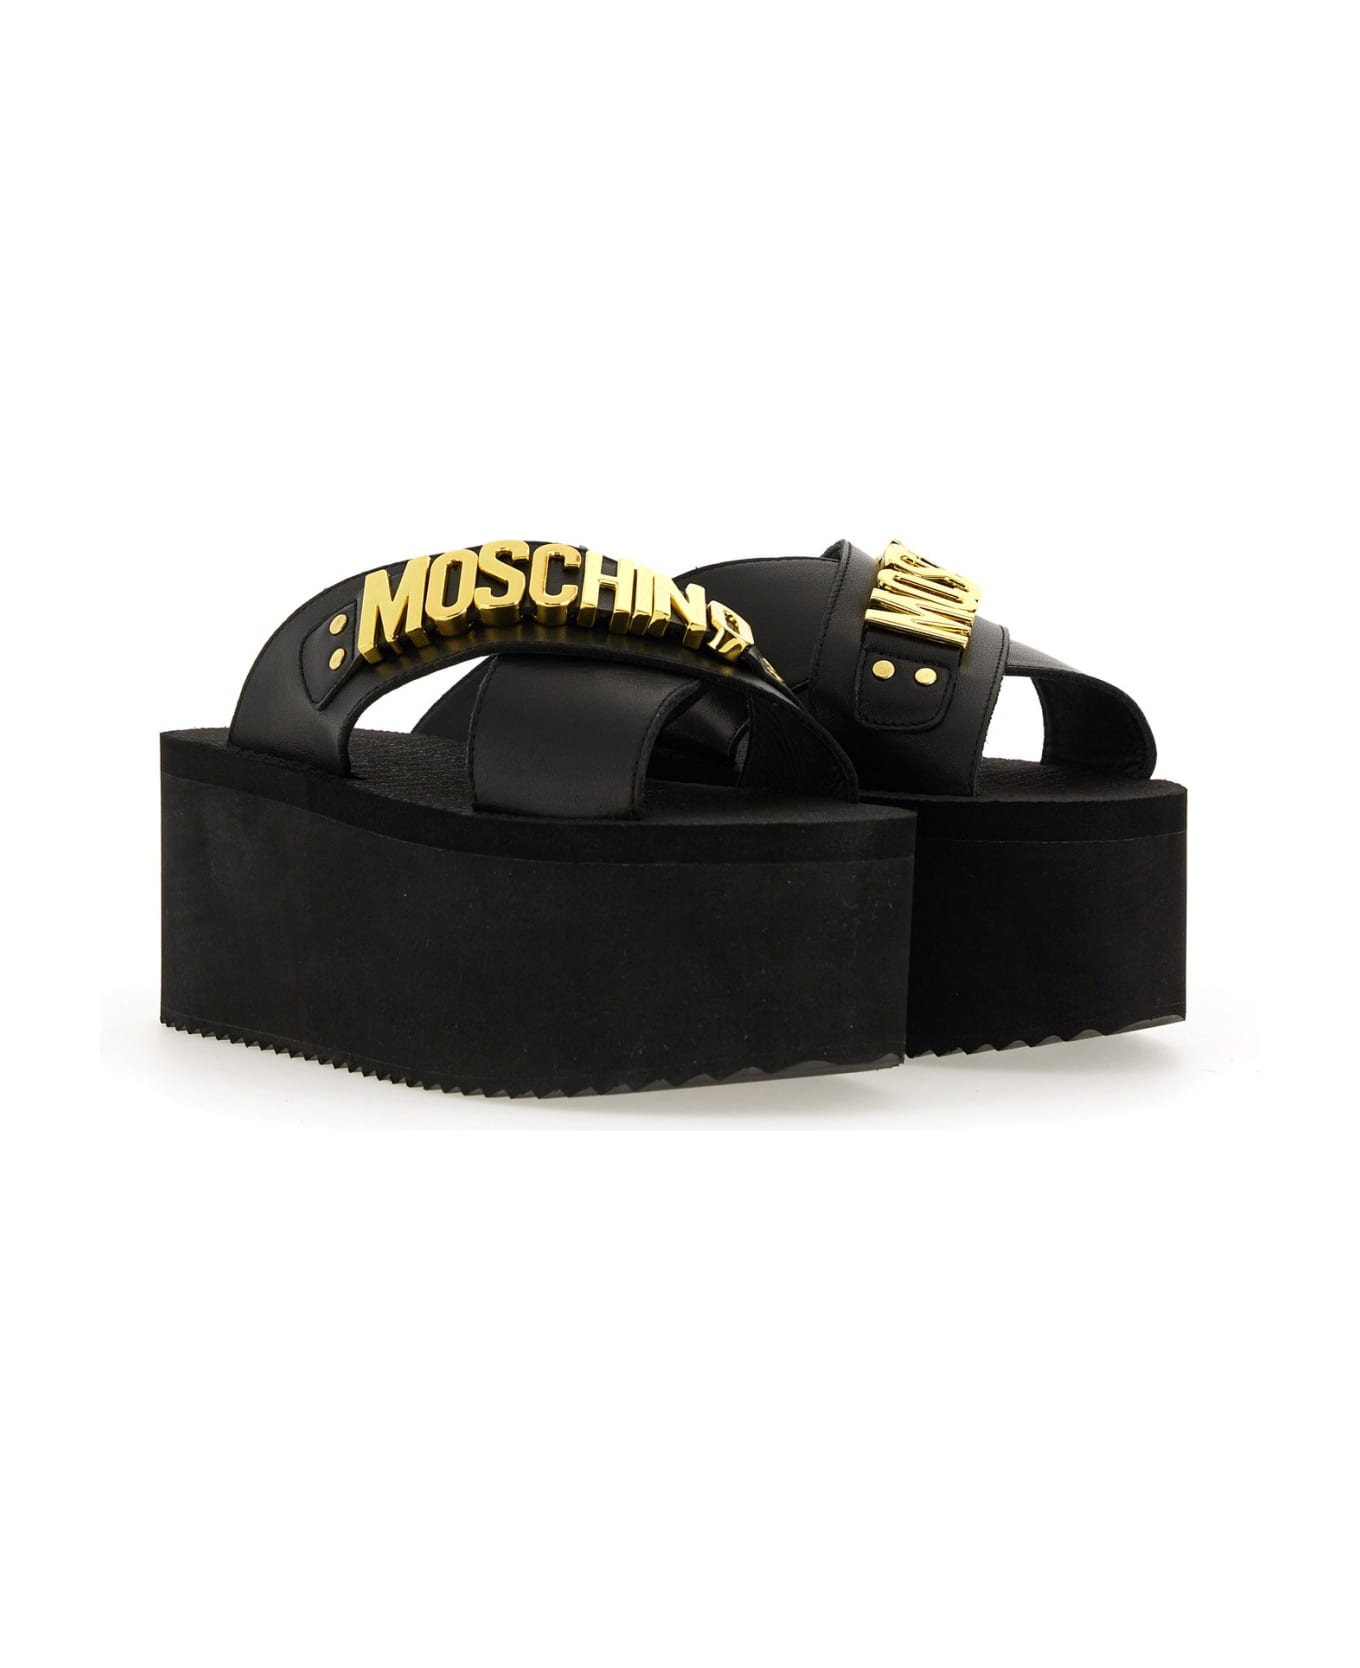 Moschino Wedge Sandals - Black サンダル